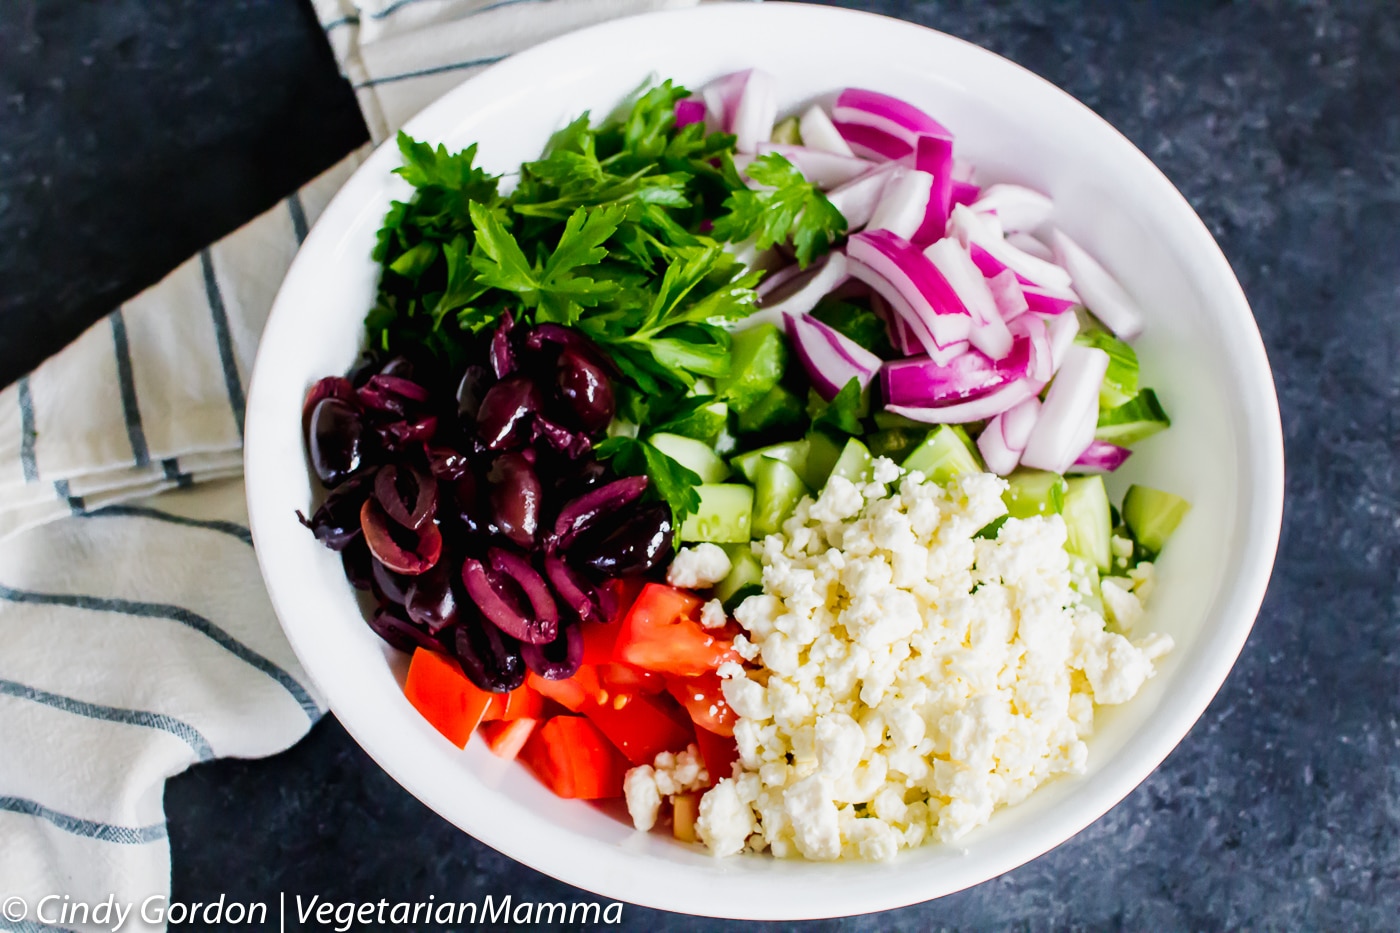 Vegetarian Greek Cucumber Salad